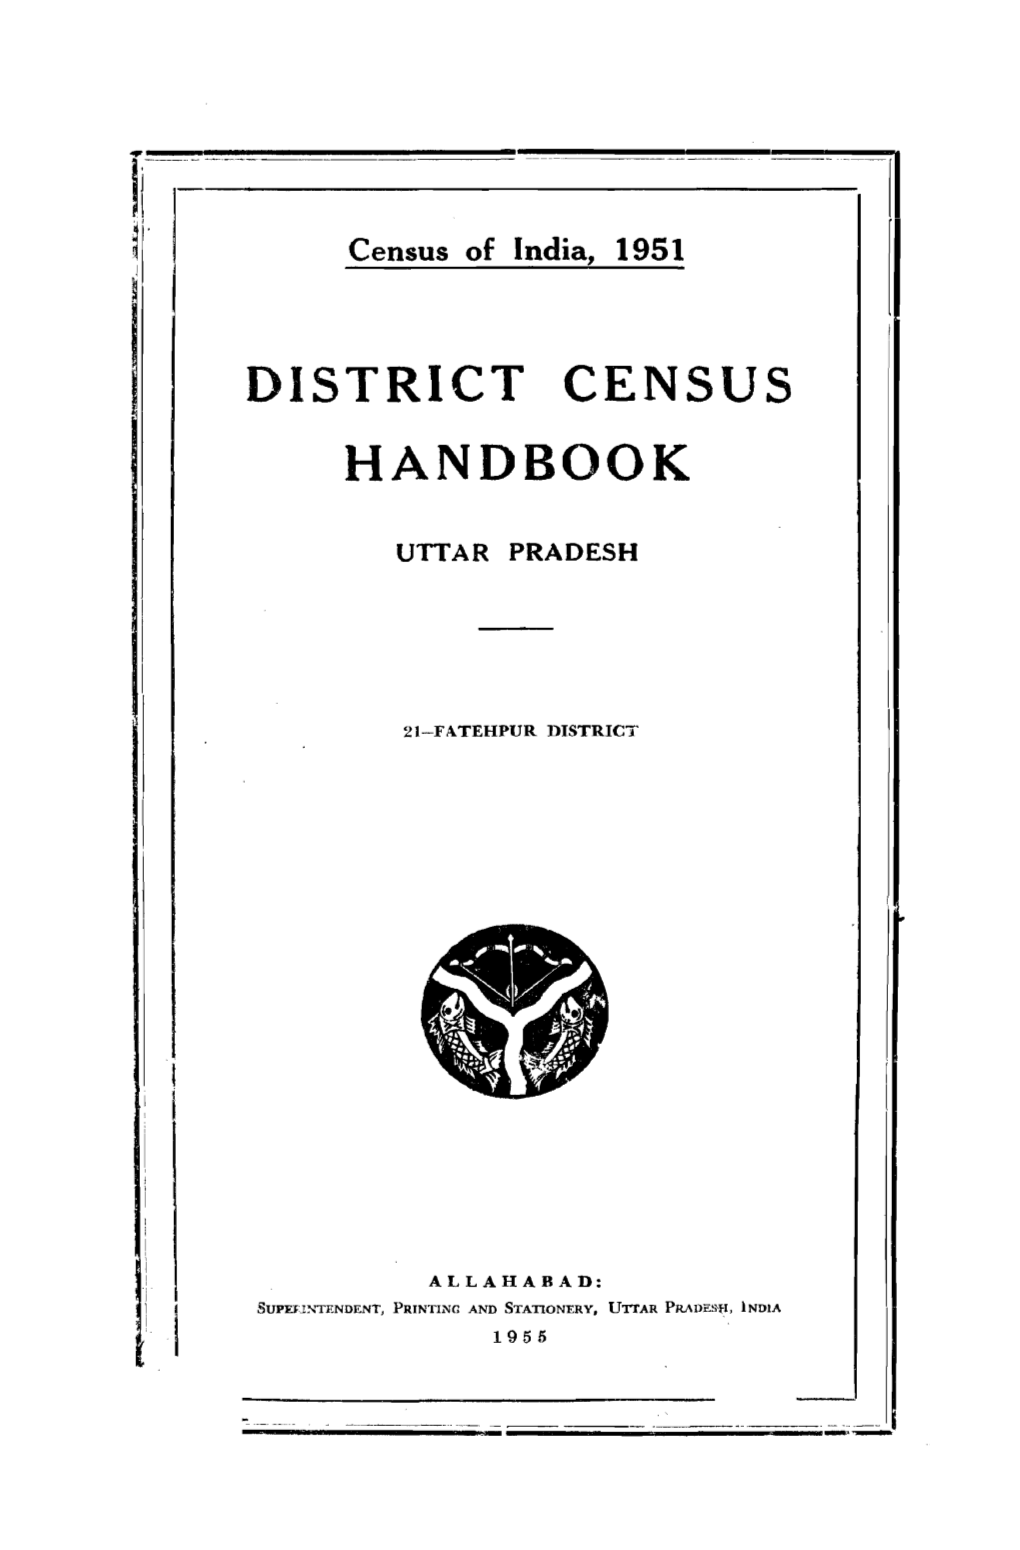 District Census Handbook, 21-Fatehpur, Uttar Pradesh